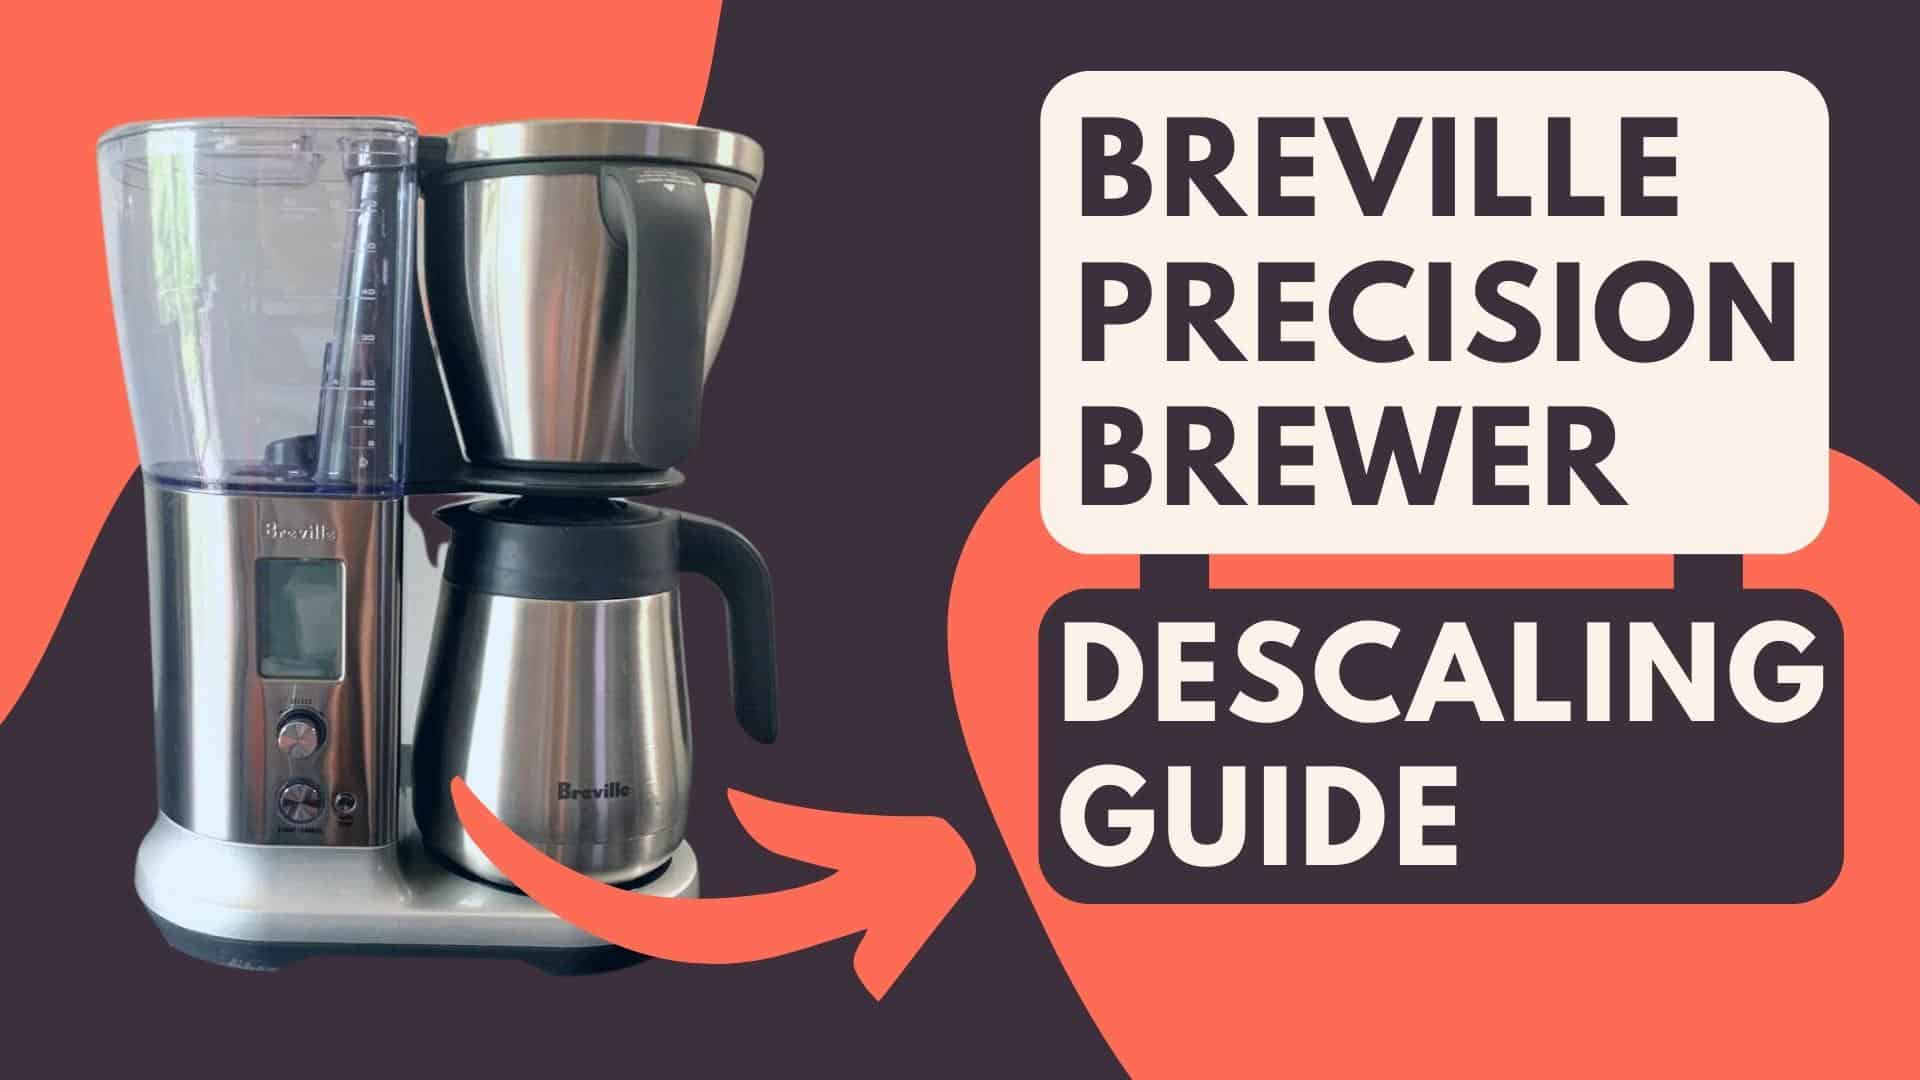 Breville precision brewer descaling guide